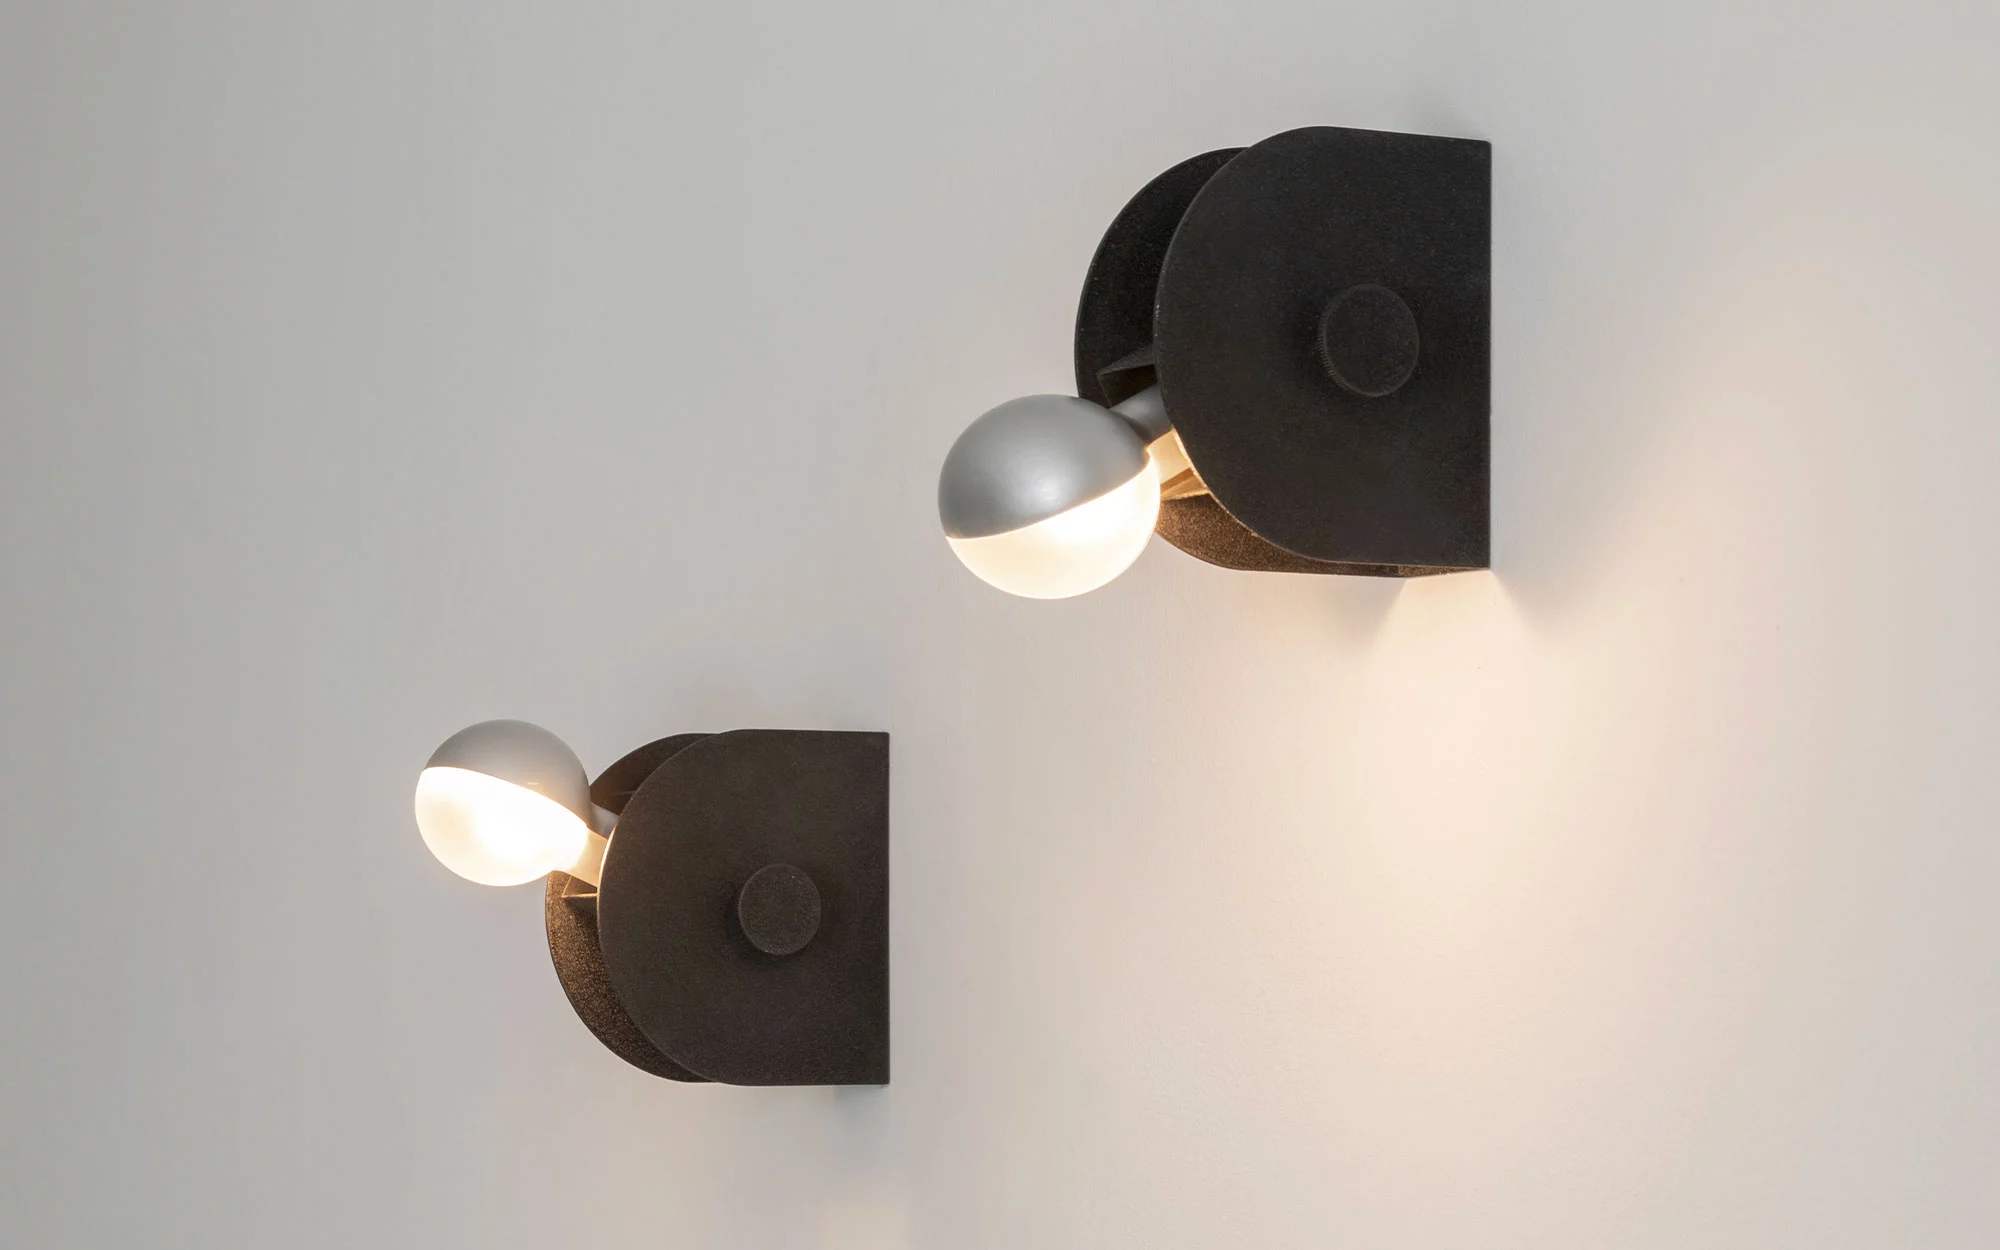 43 - Gino Sarfatti - Ceiling light - Galerie kreo